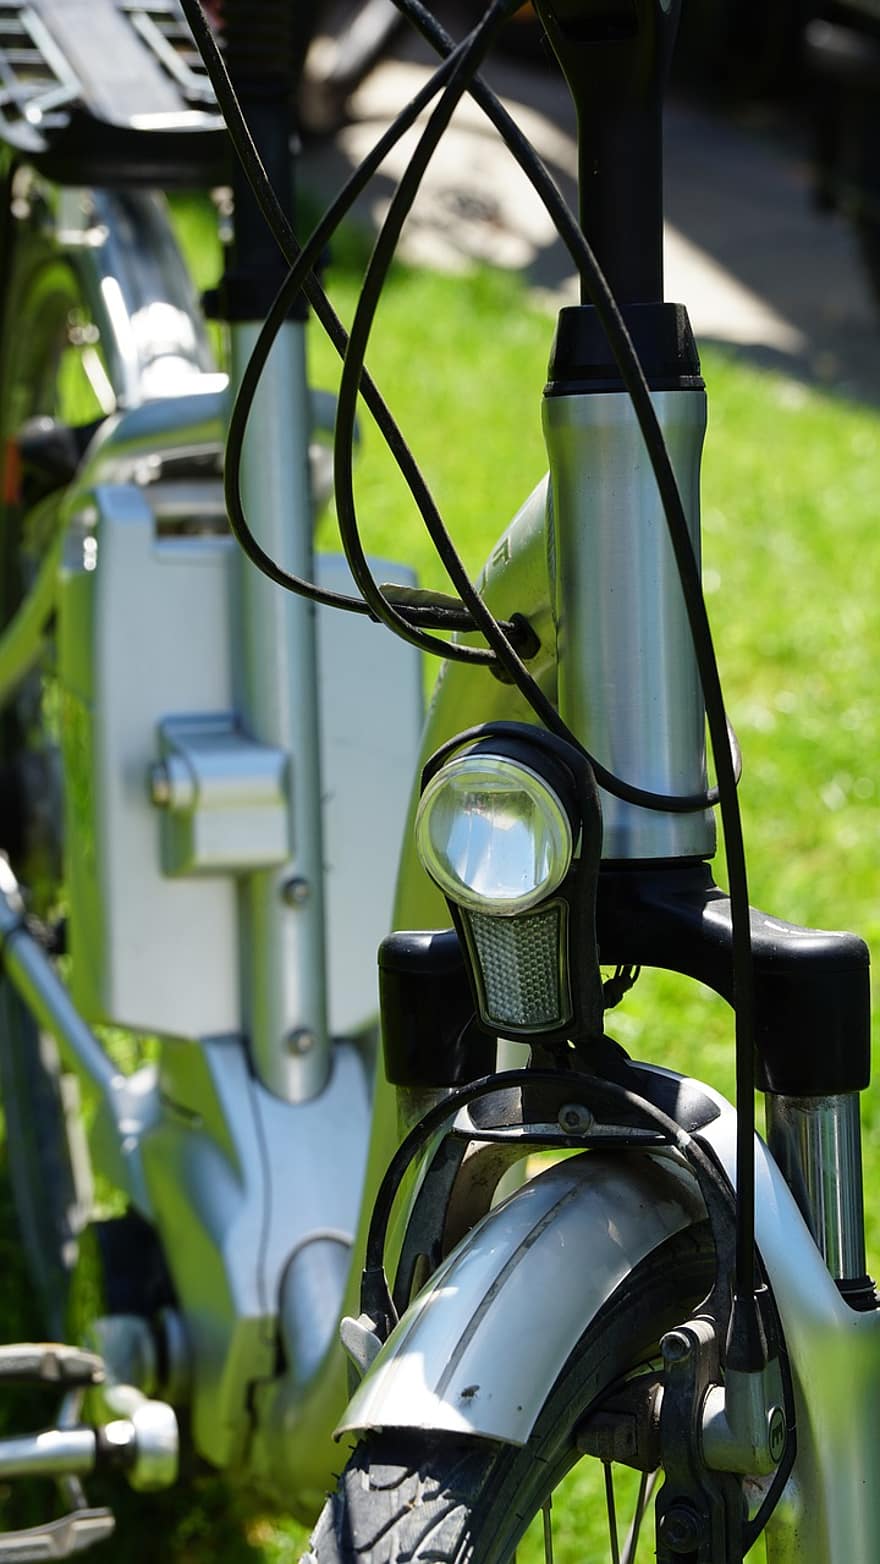 ebike ، دراجة هوائية ، دراجة ، دراجة كهربائية ، الدراجة الهوائية الأحادية العجلة